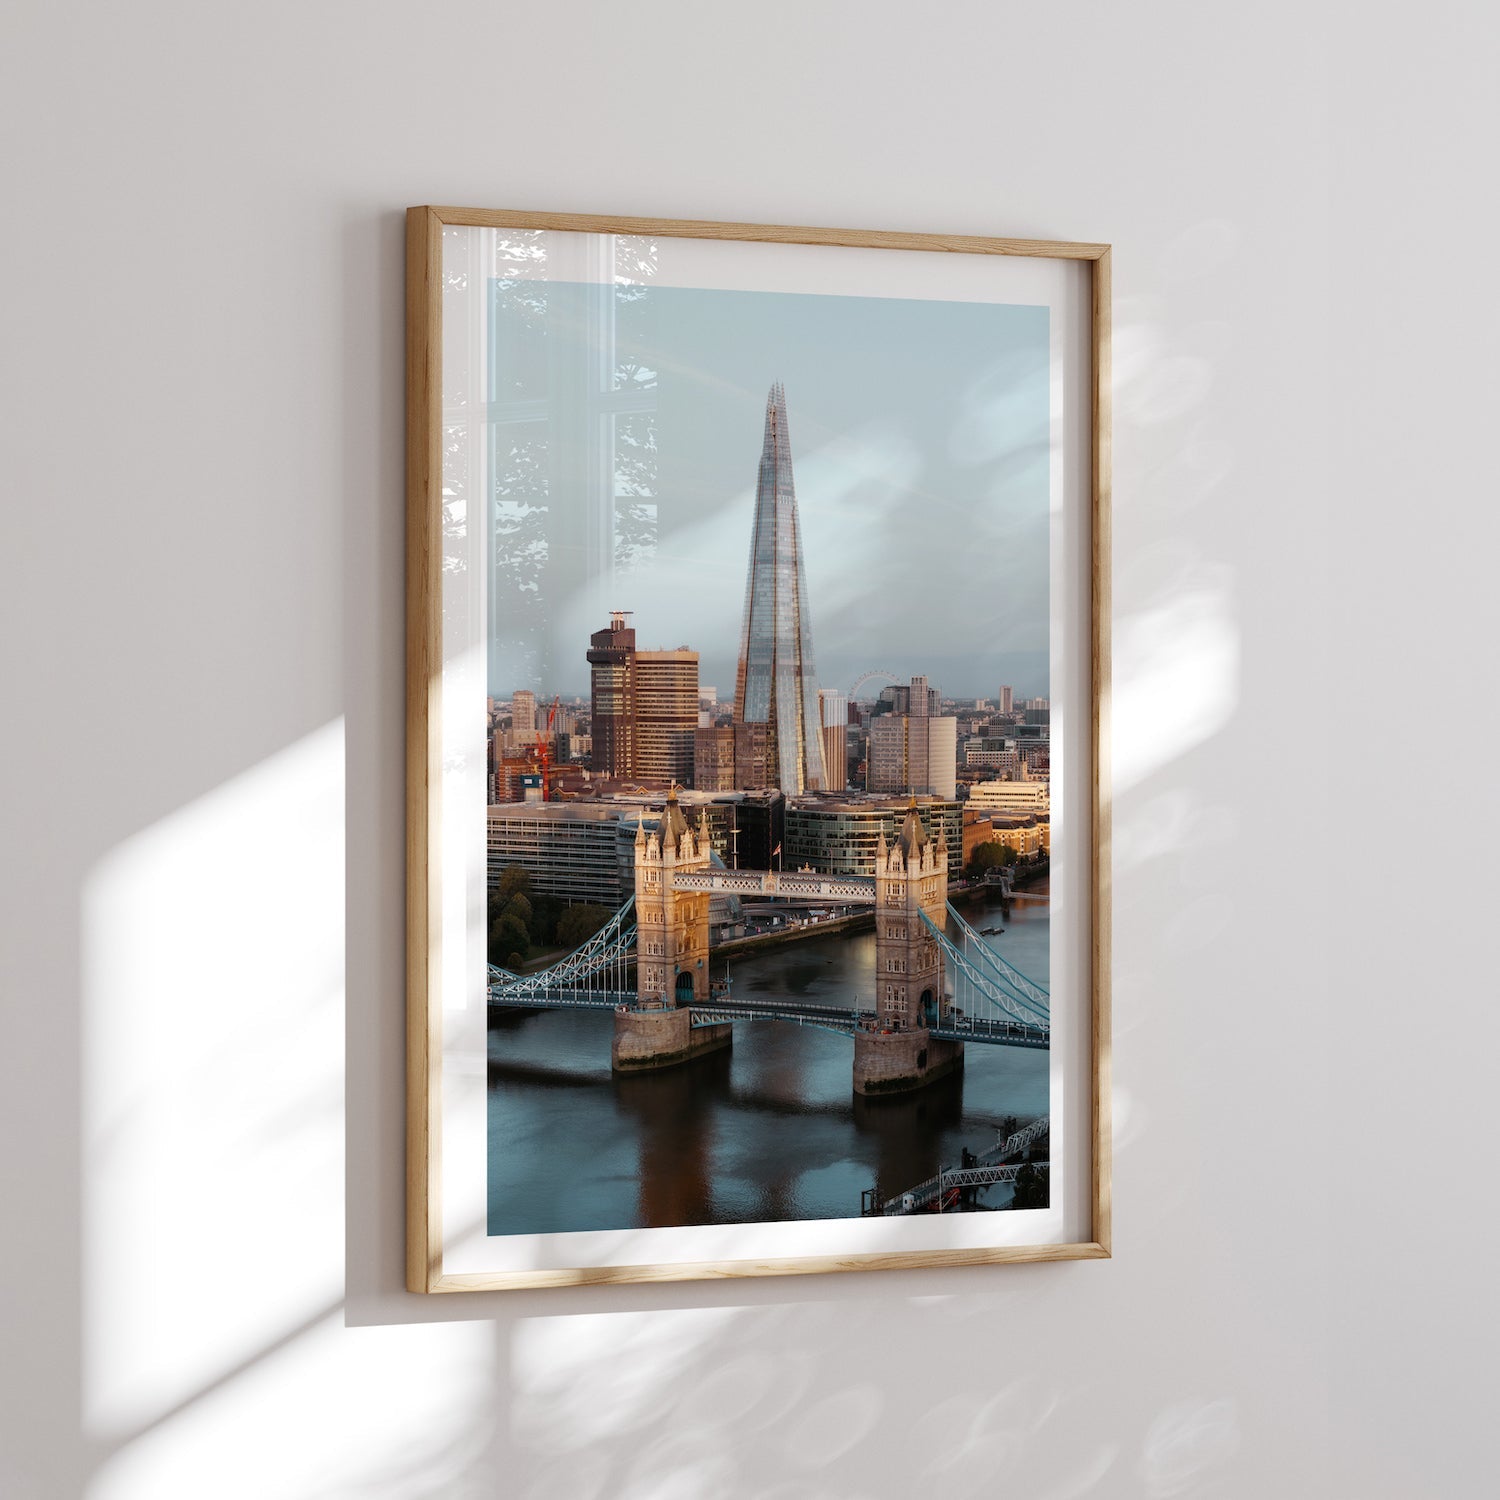 London Tower Bridge II - Peter Yan Studio